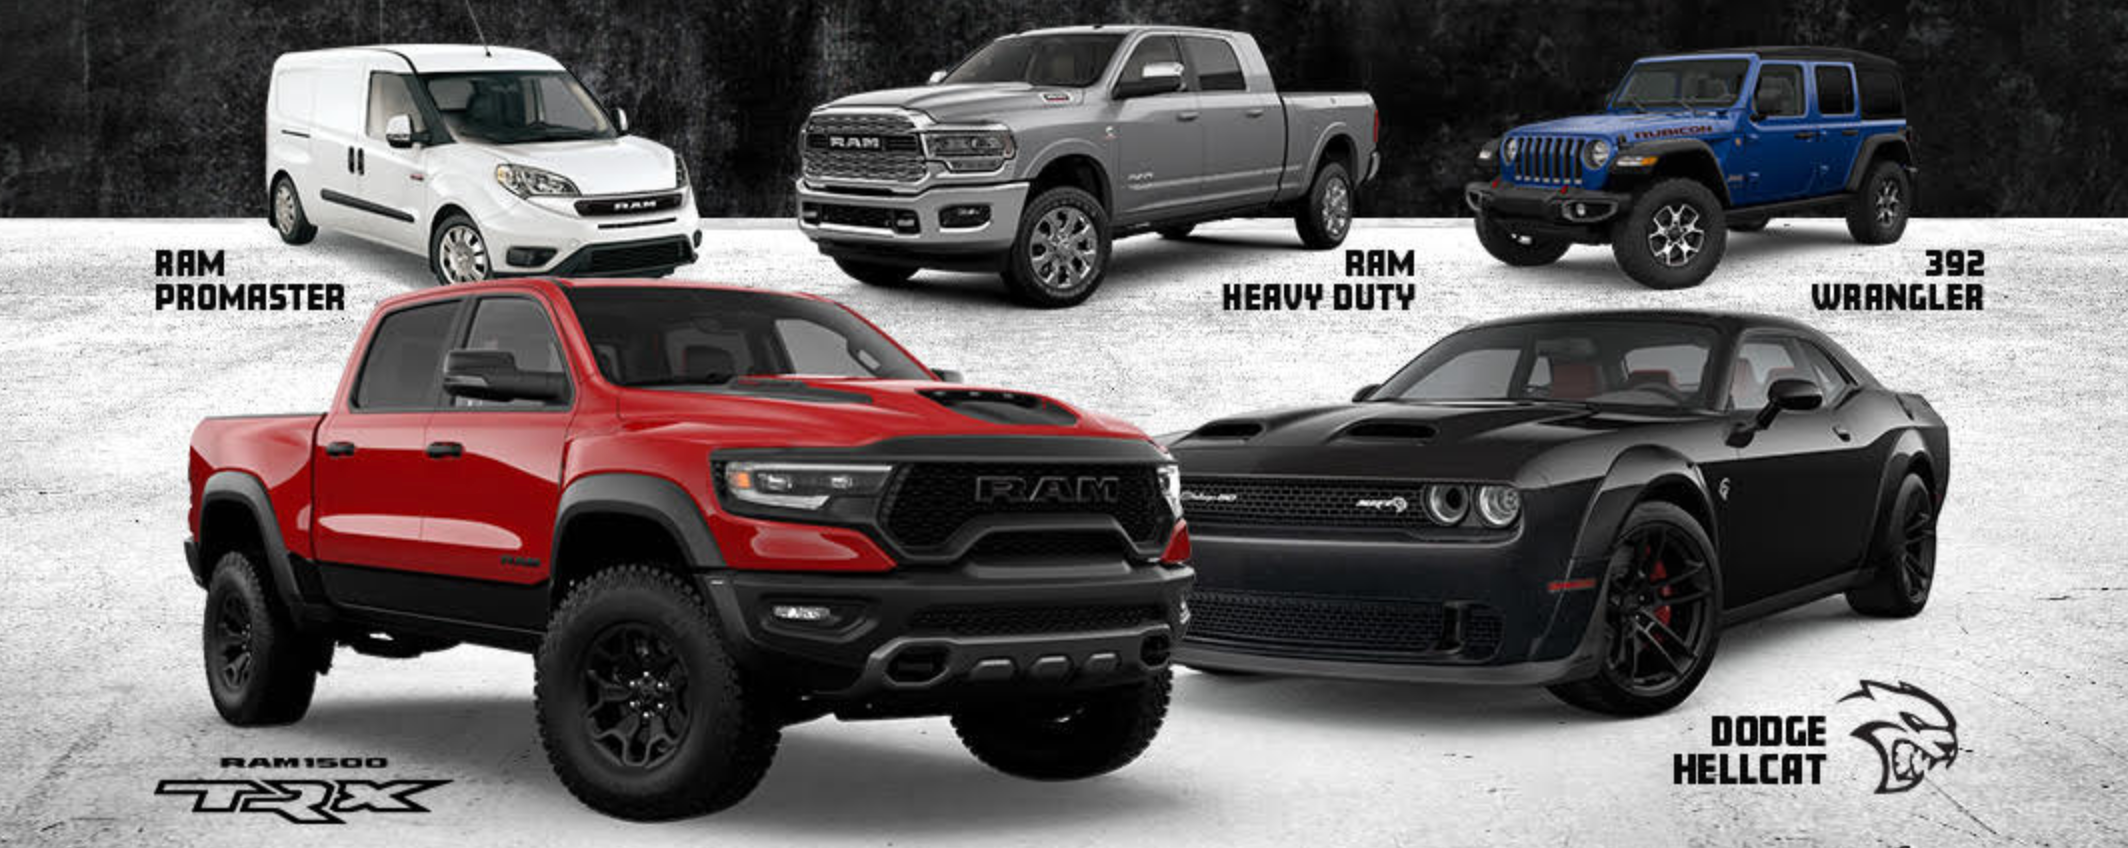 $1,000 off Pre-Orders on Select Chrysler, Dodge, Jeep, Ram Models